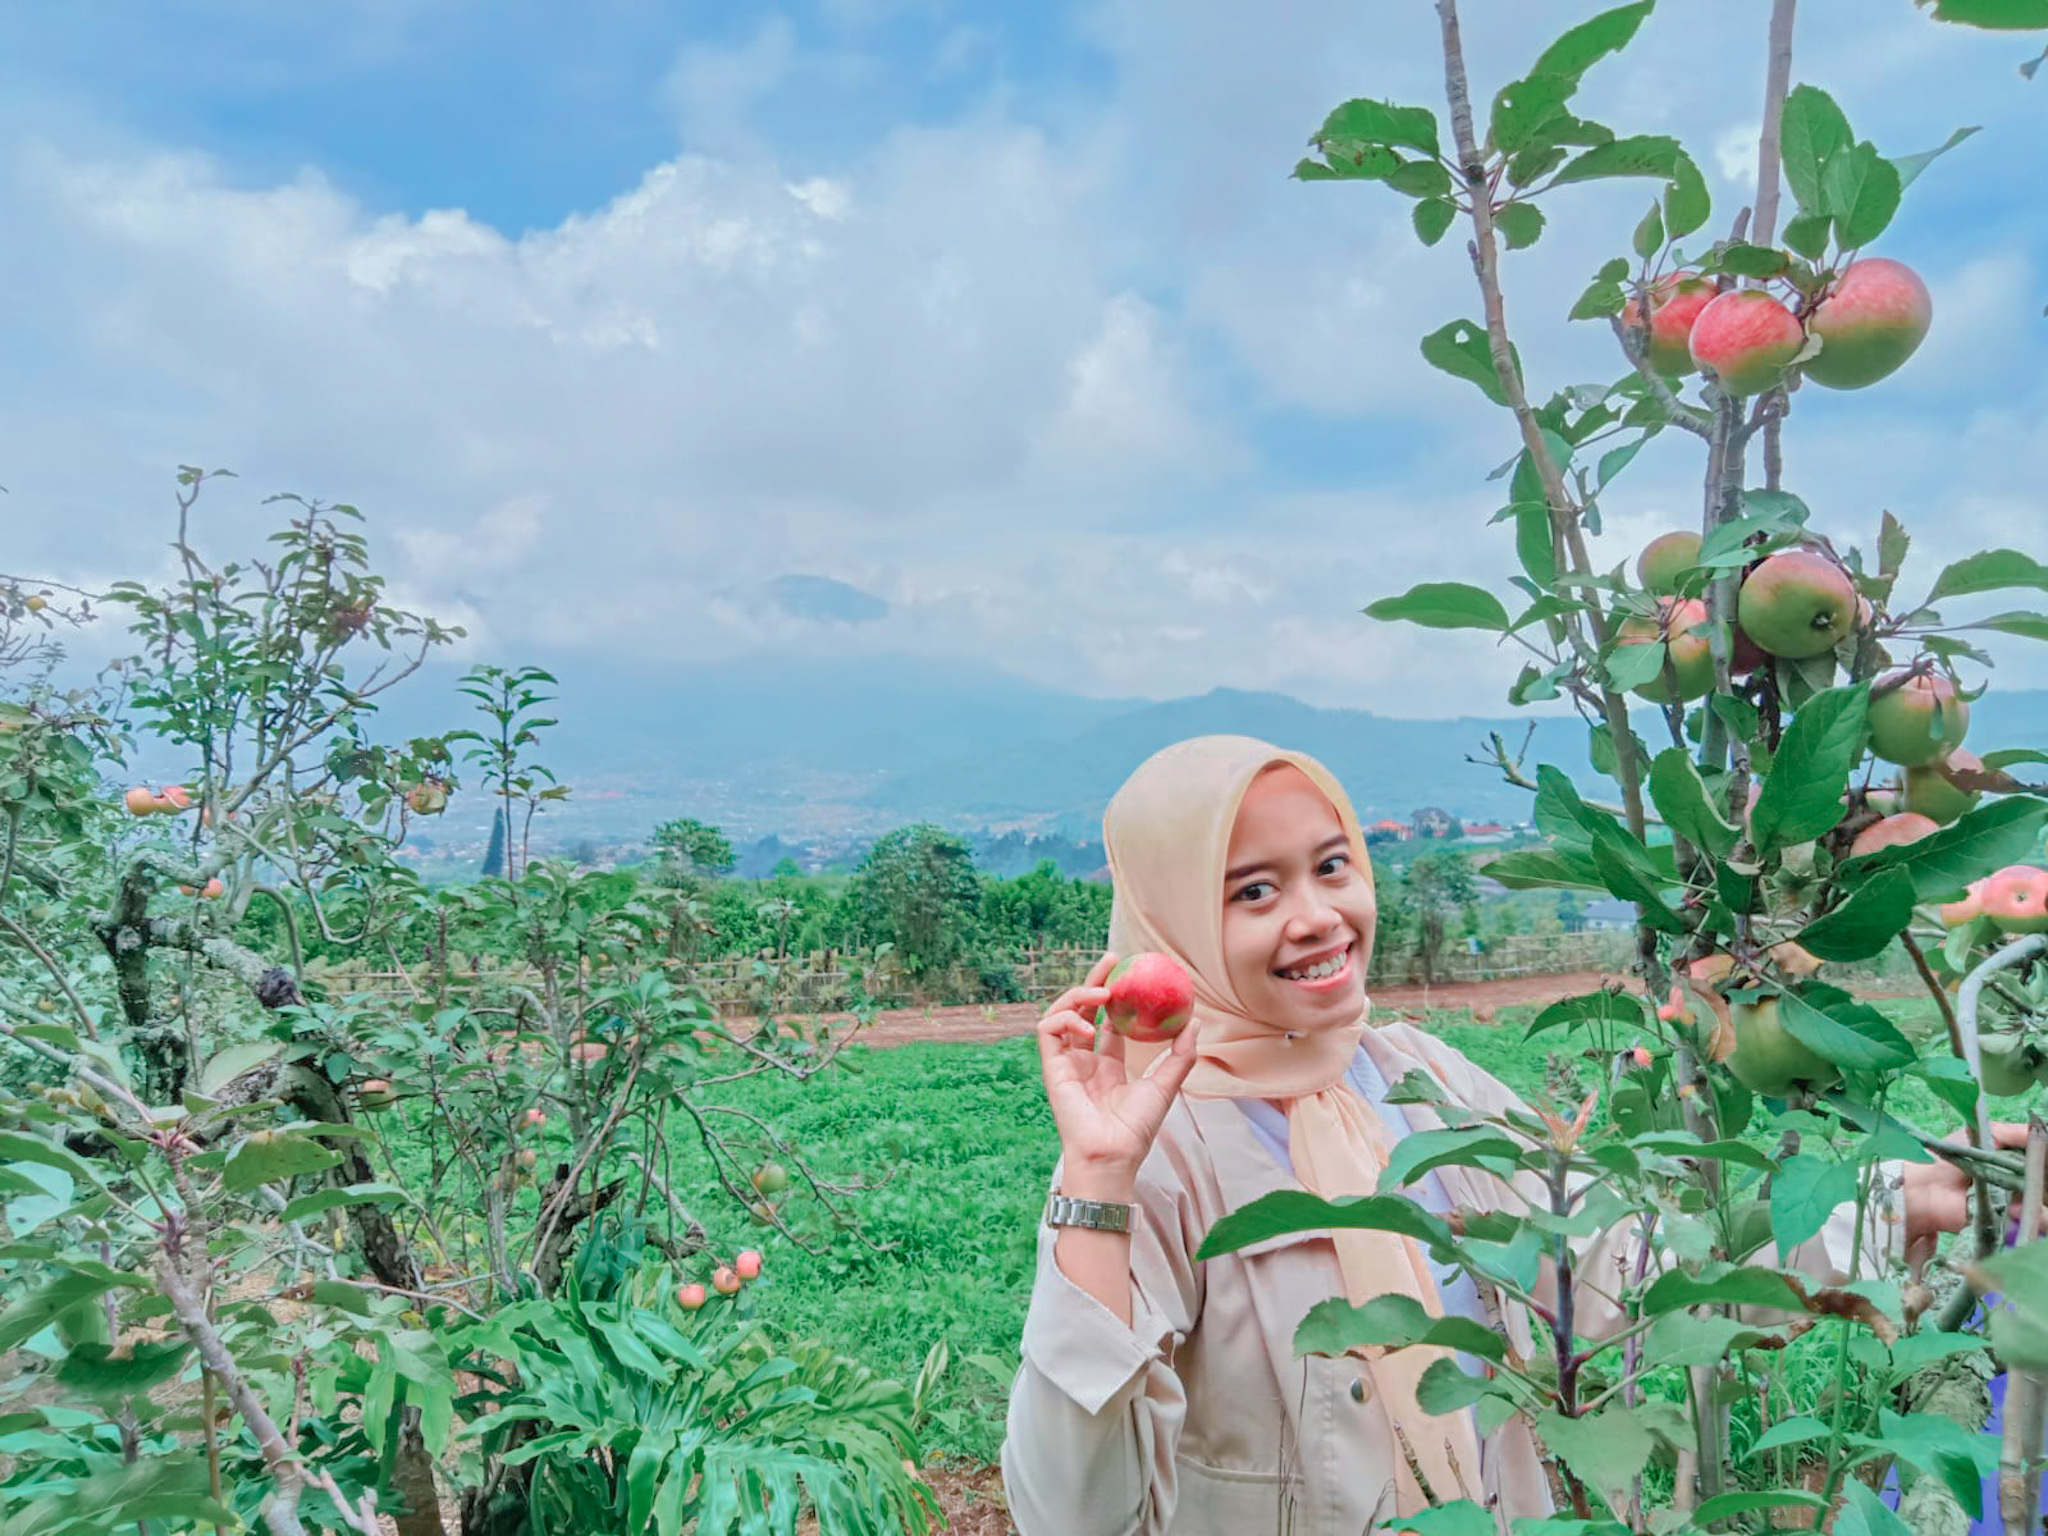 Wisata di Batu Malang agro wisata petik apel